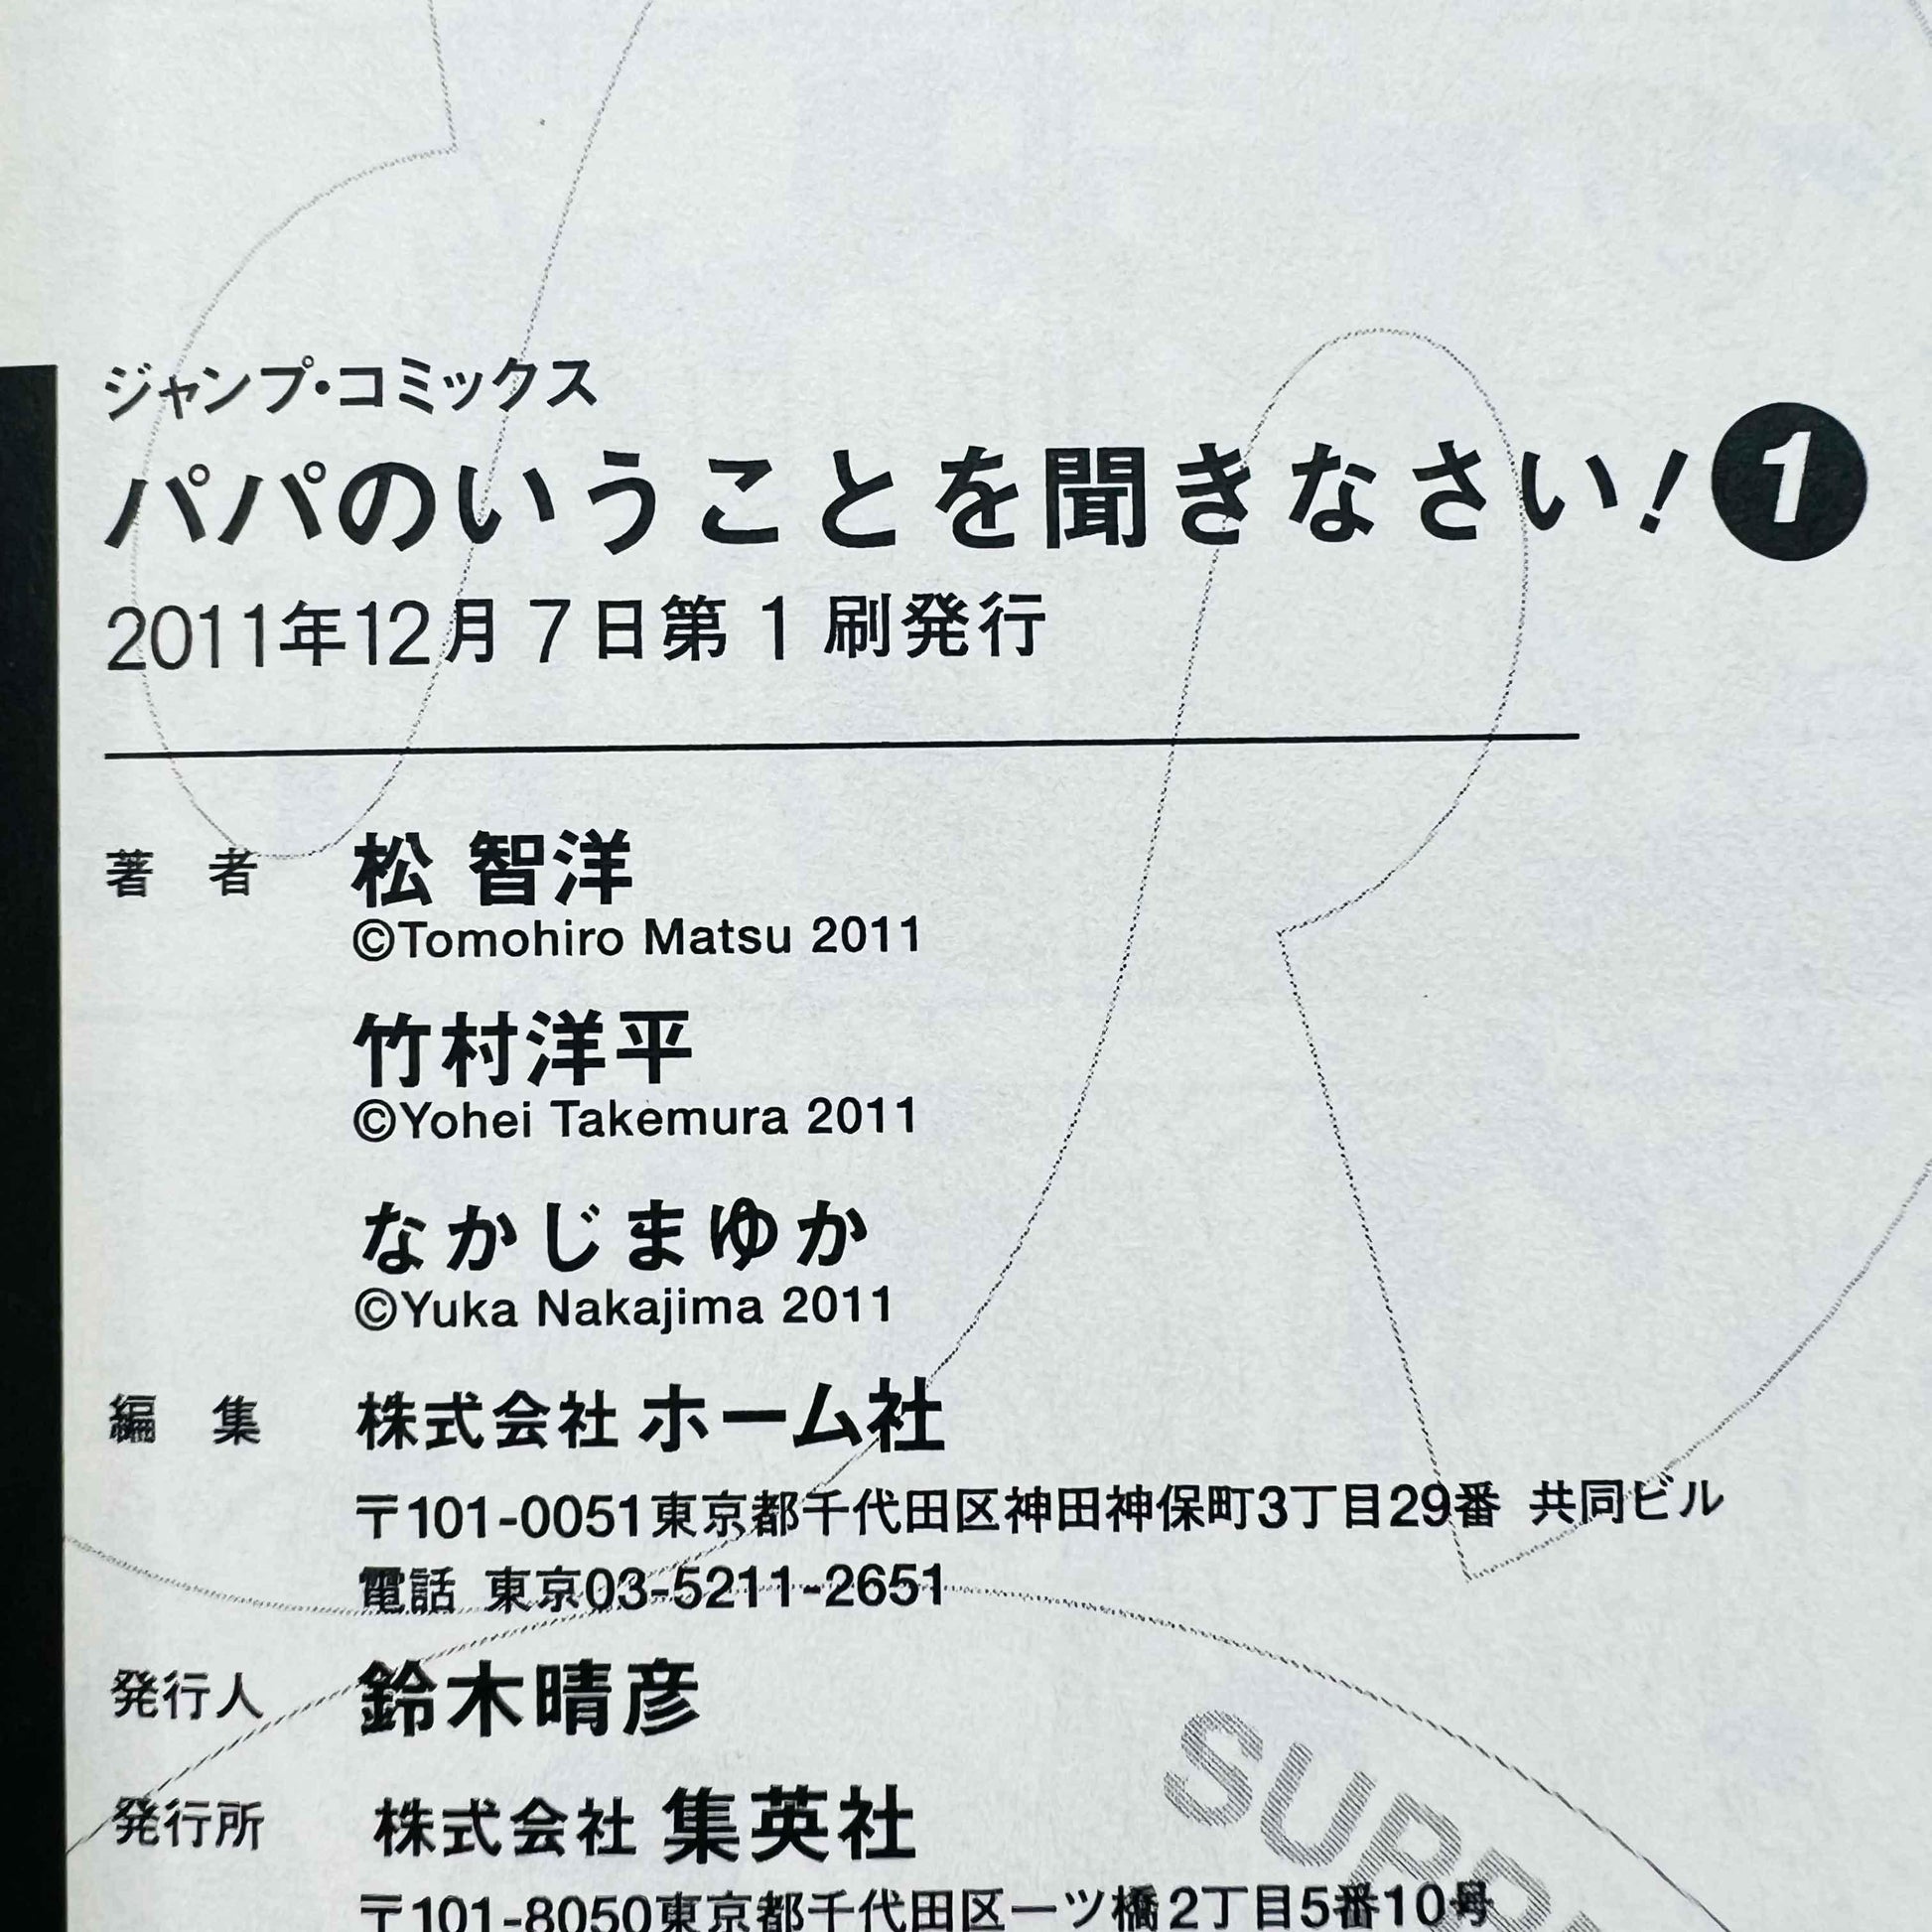 Papa no Iukoto wo Kikinasai - Volume 01 - 1stPrint.net - 1st First Print Edition Manga Store - M-PAPAIUKOT-01-001